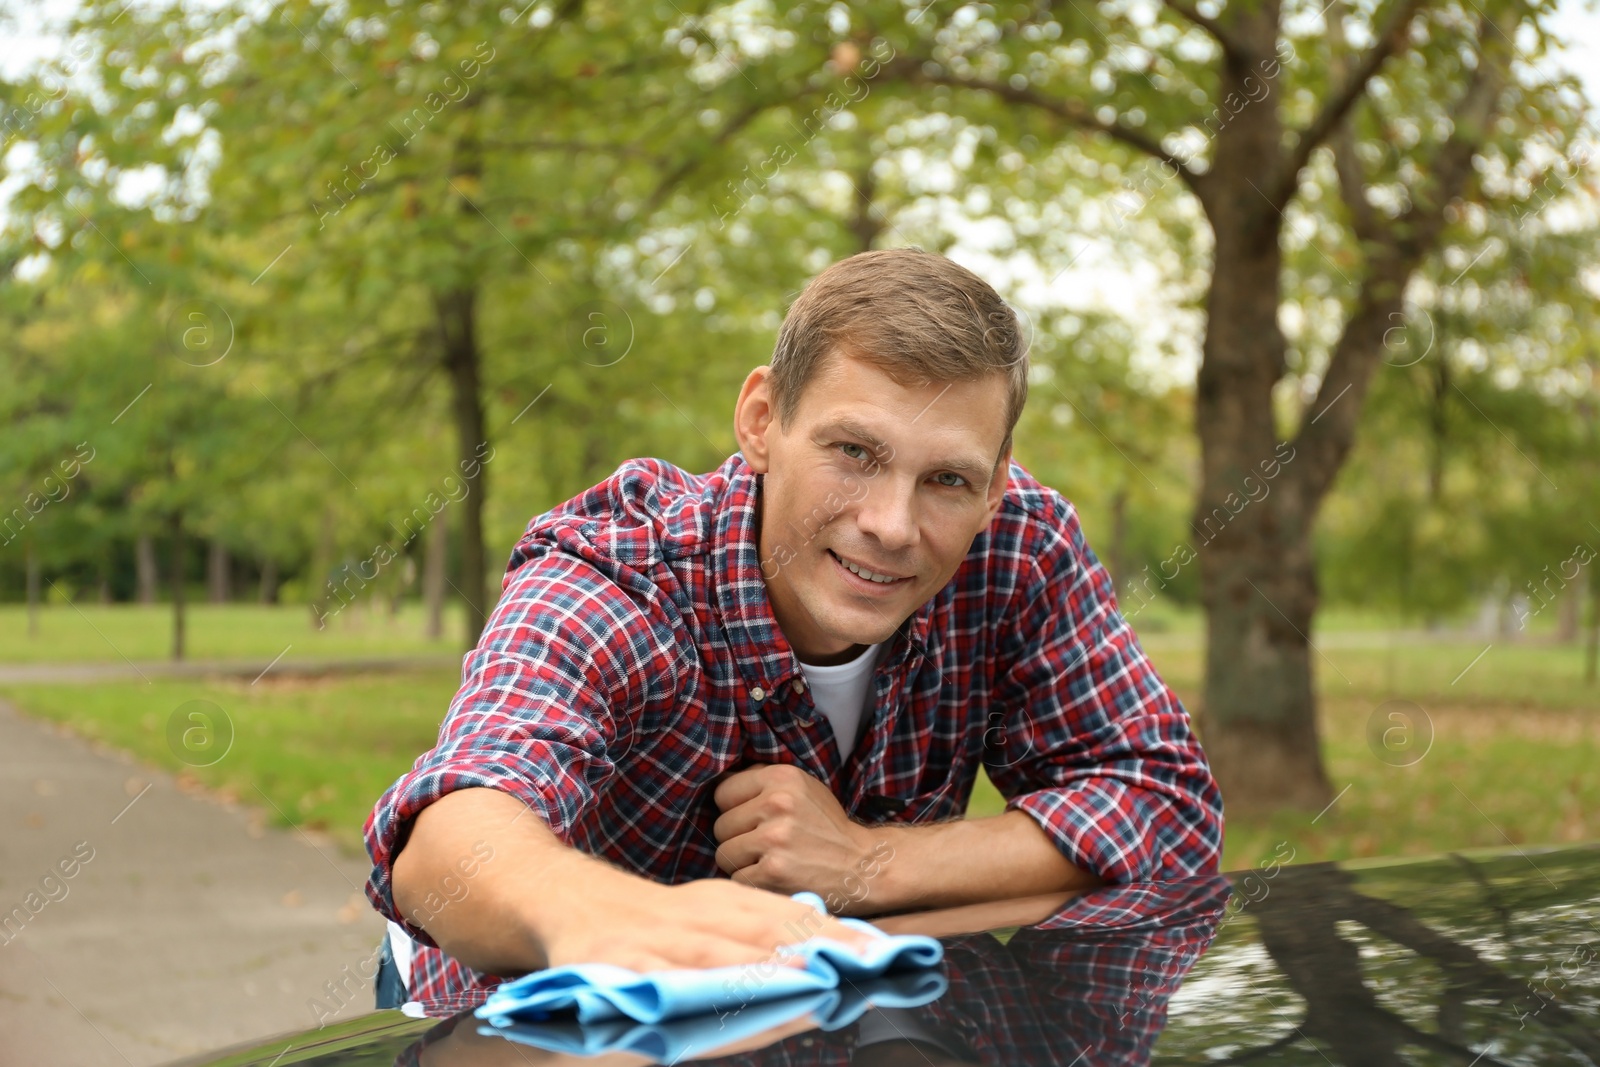 Photo of Man washing car hood with rag outdoors